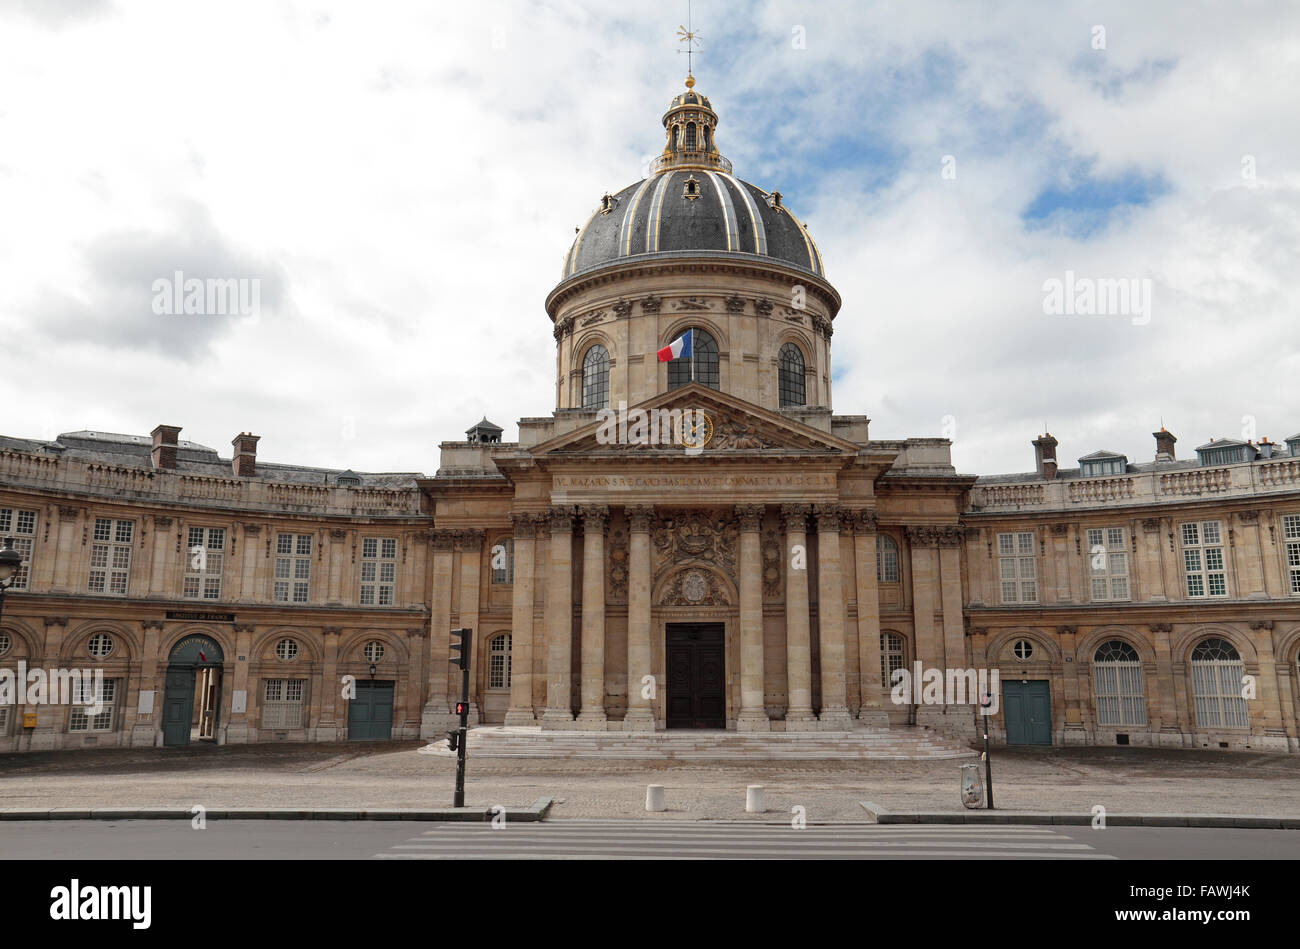 The Institut de France (French Institute) in Paris, France. Stock Photo